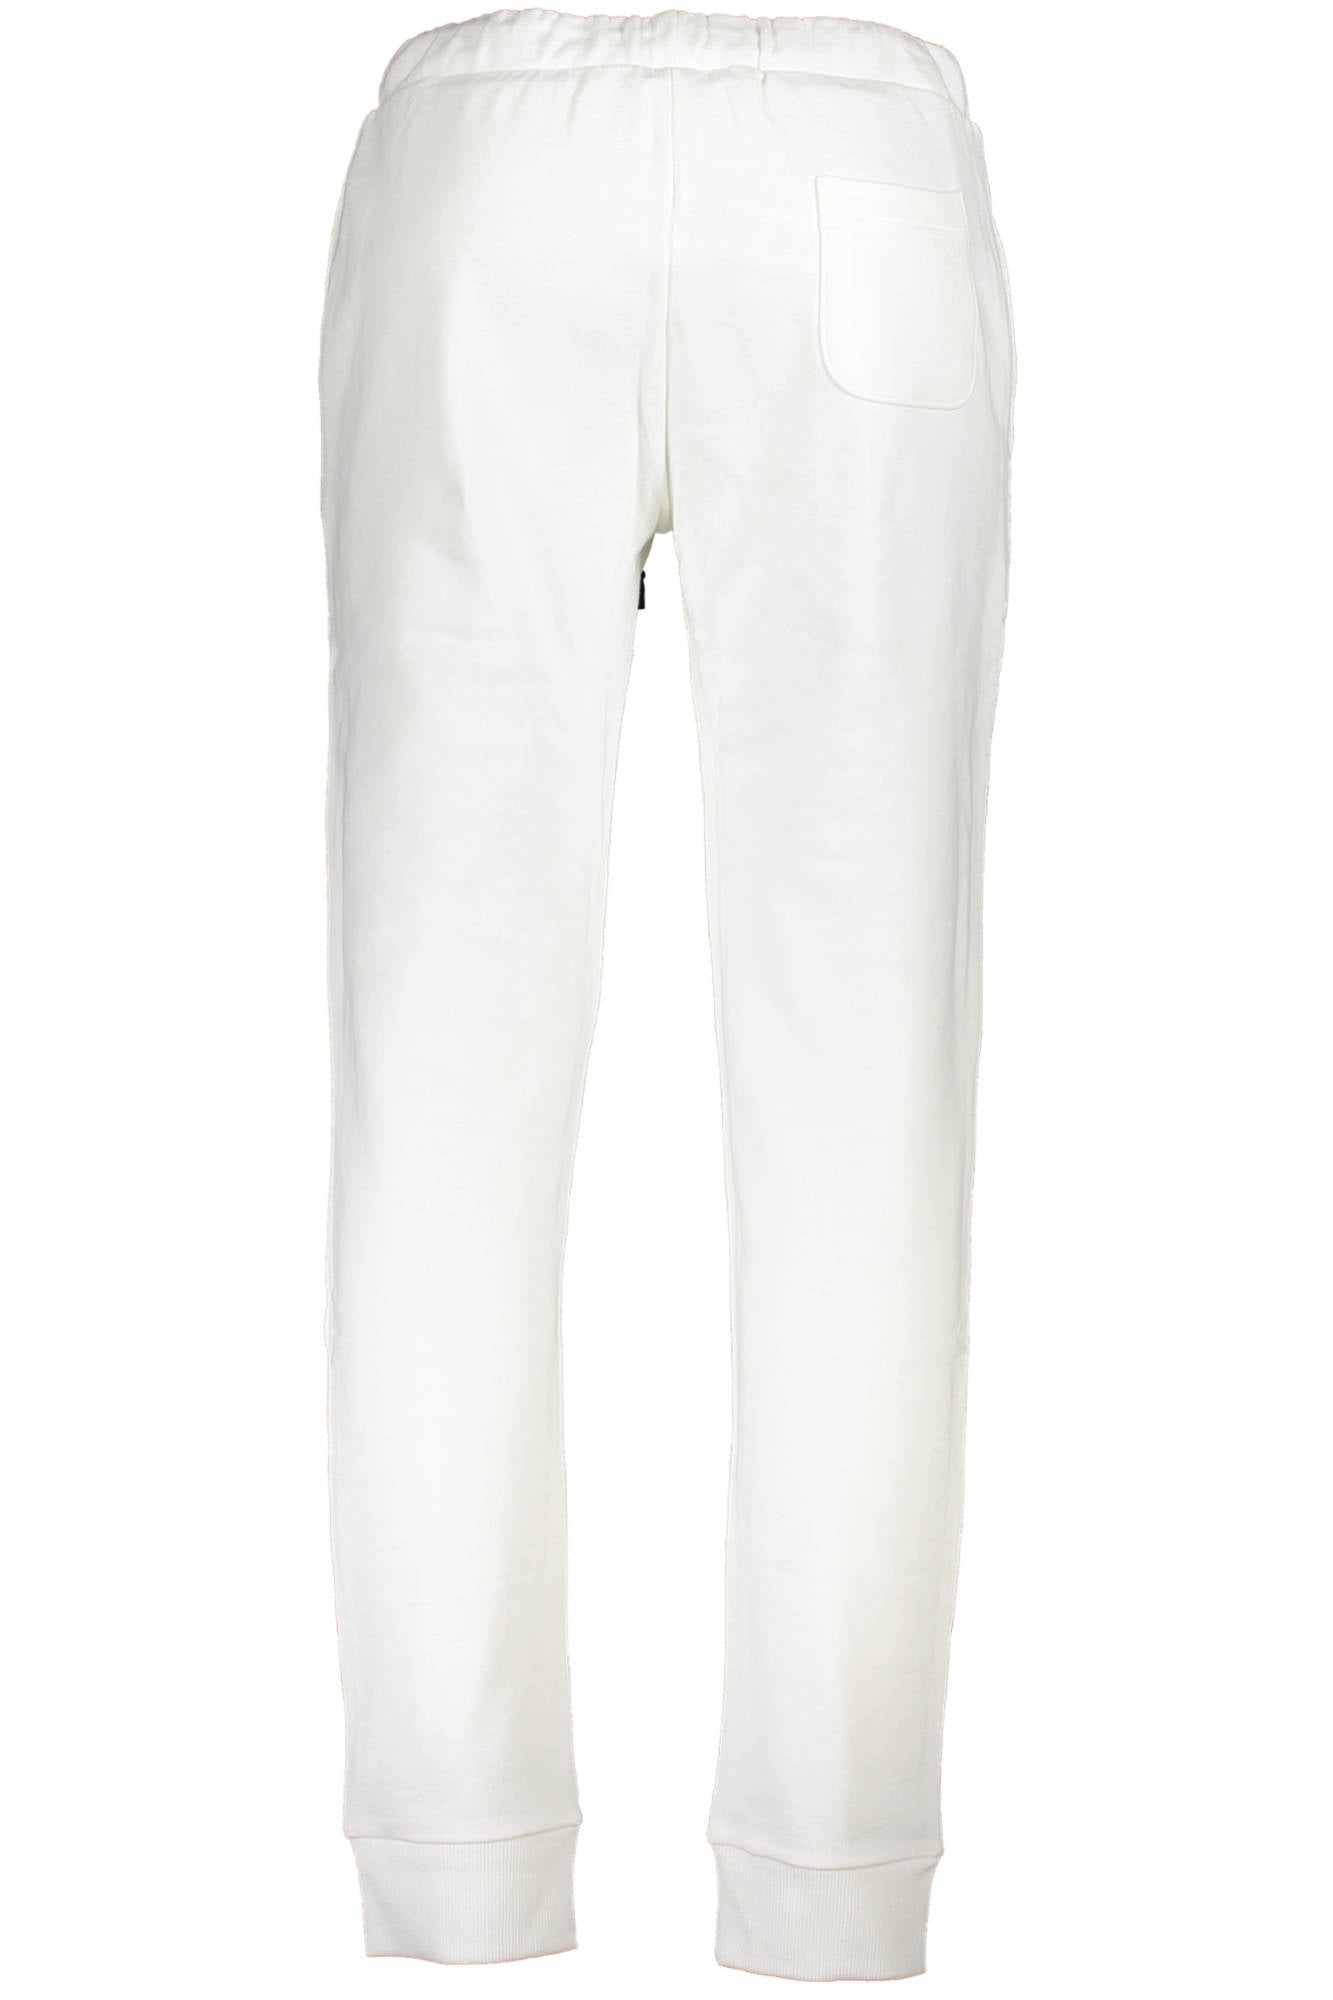 La Martina White Jeans & Pant - Fizigo